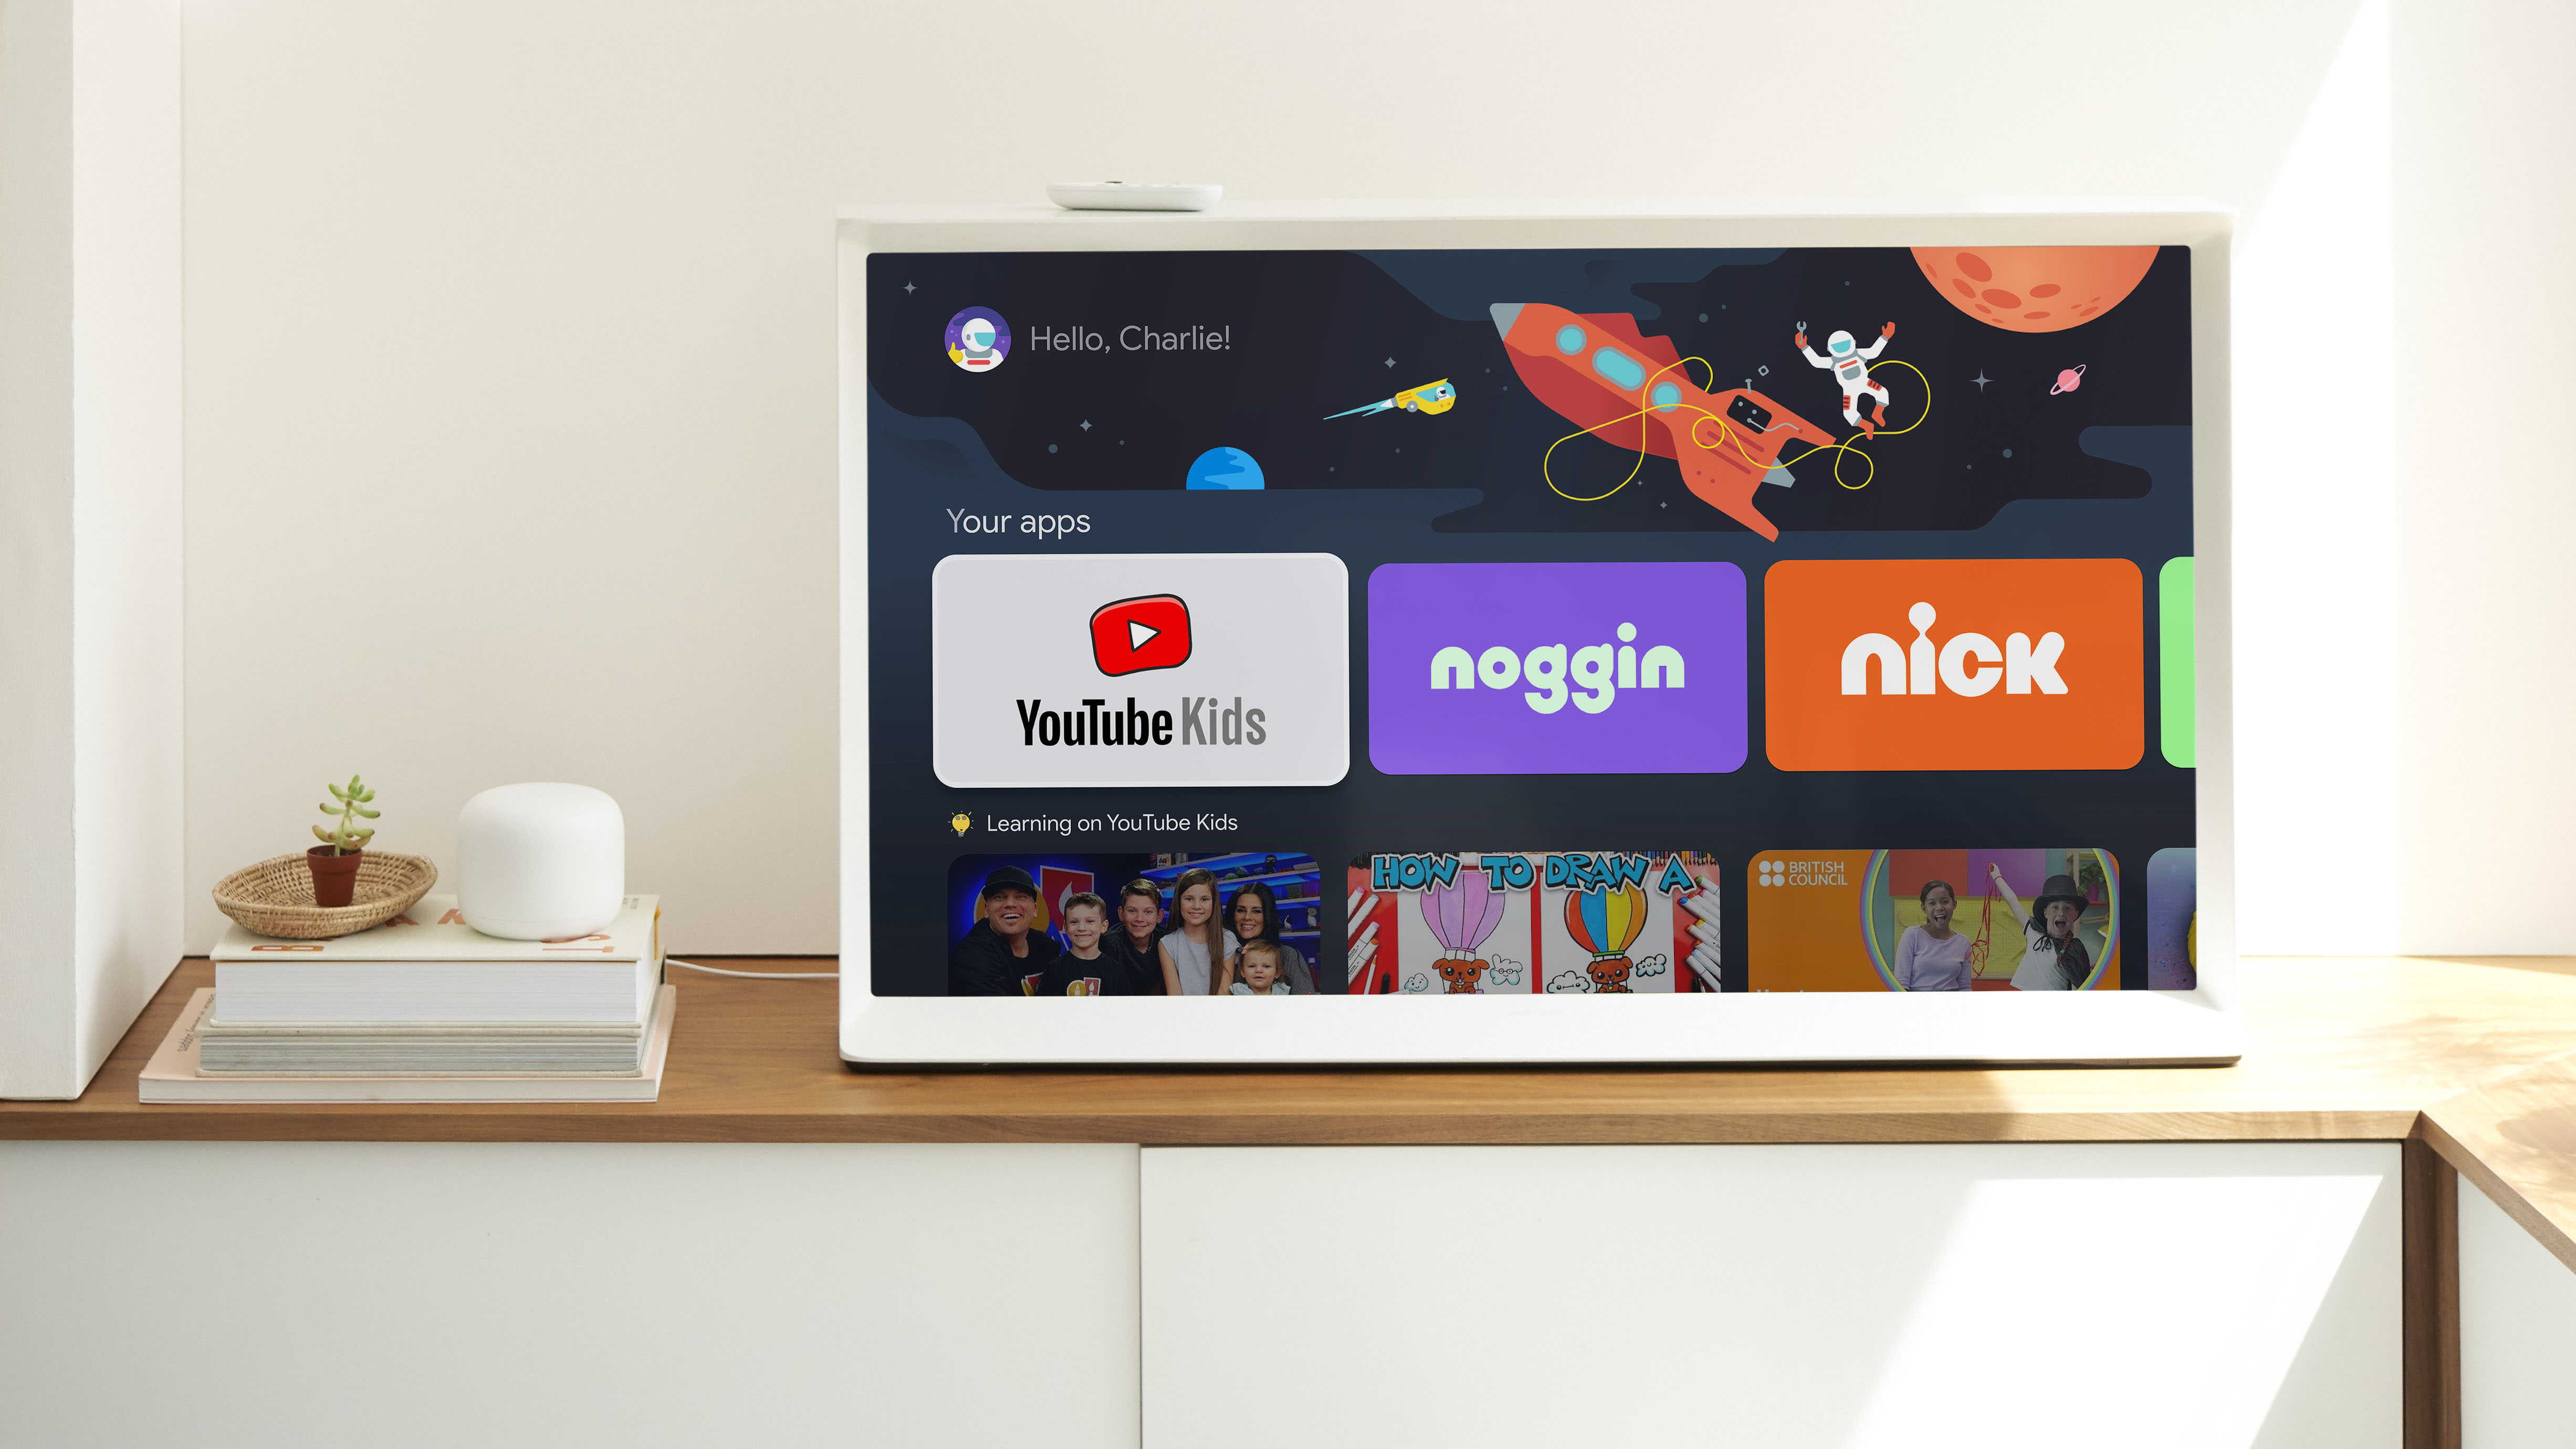 Chromecast Google TV (4K) Snow GA01919-US - Best Buy